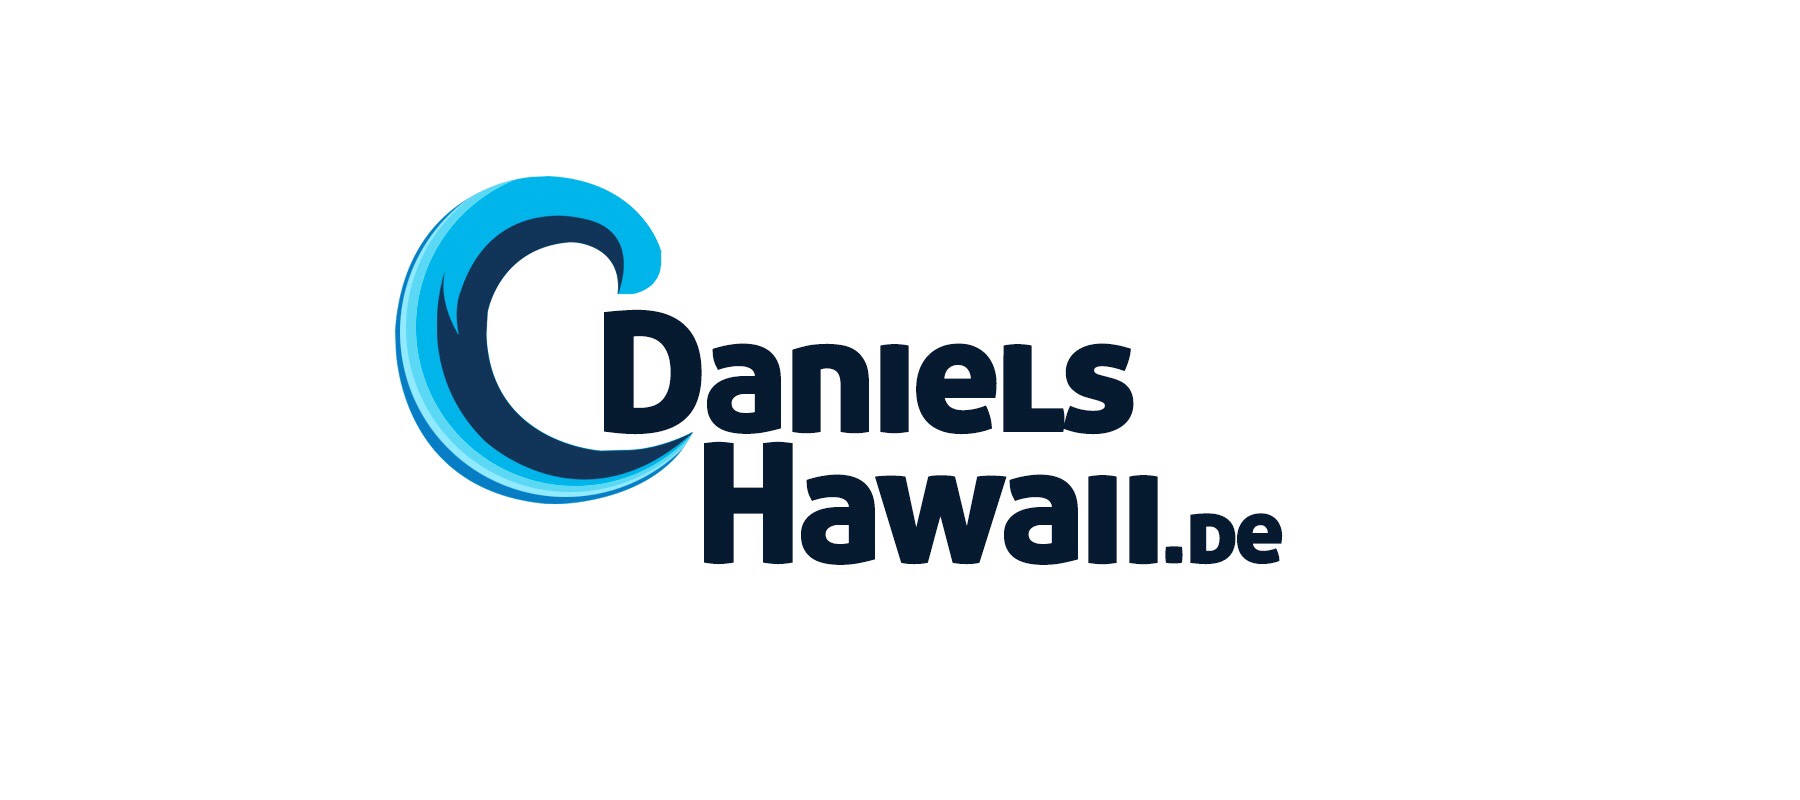 DanielsHawaii - Deutsche Touren in Hawaii